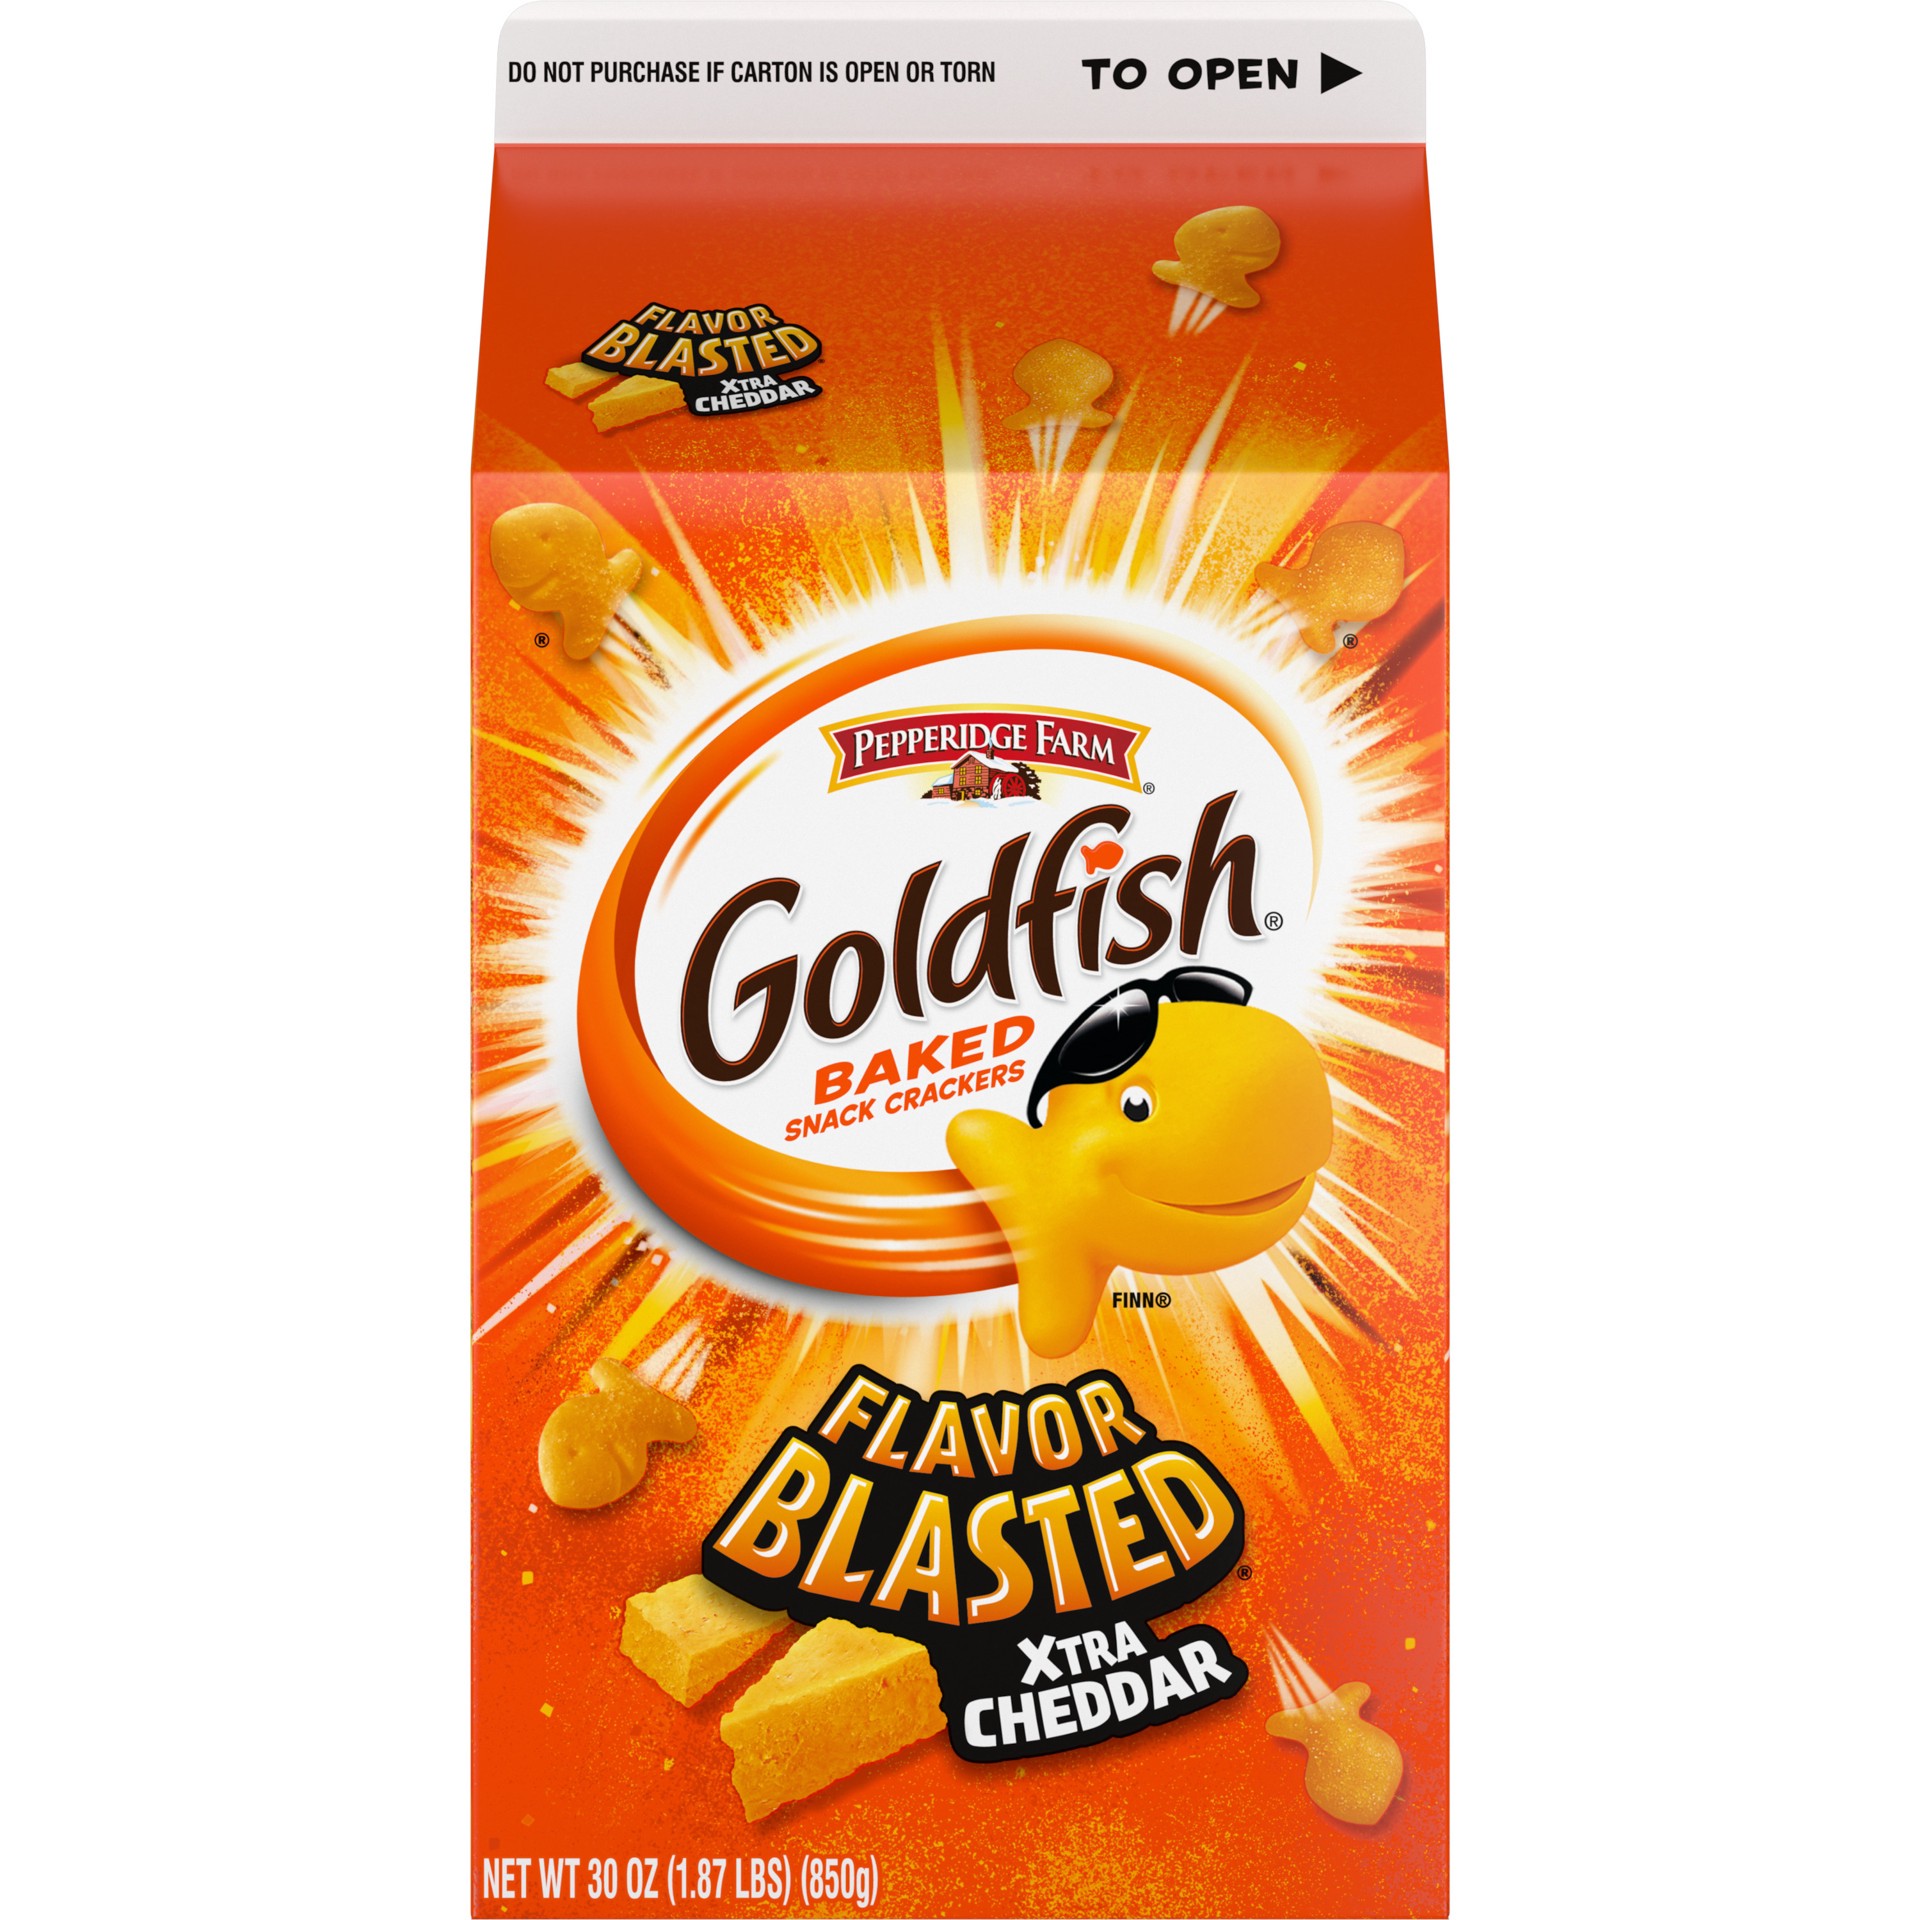 slide 4 of 5, Goldfish Flavor Blasted Xtra Cheddar Baked Snack Crackers - 30oz, 30 oz